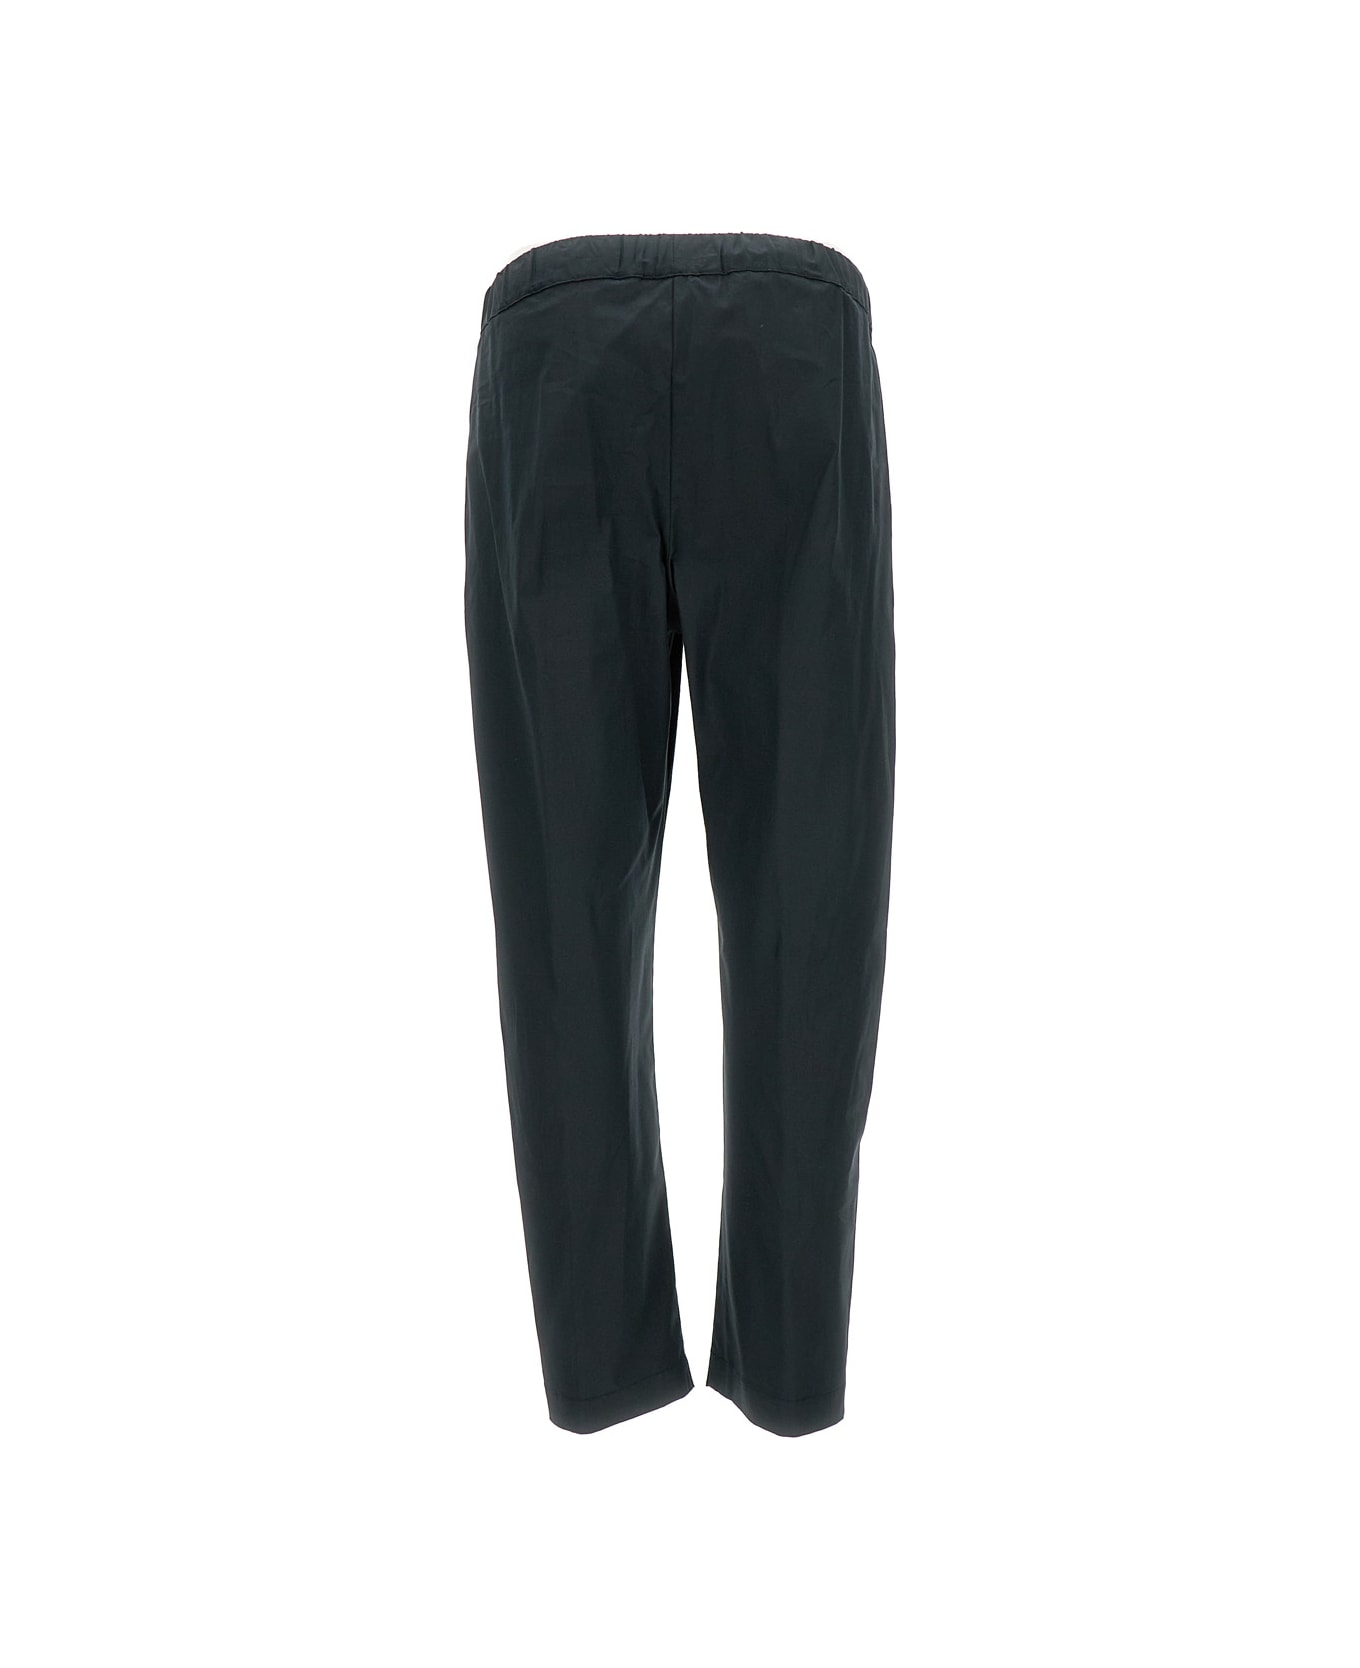 SEMICOUTURE Black Crop Cut Pants In Cotton Blend Woman - Black